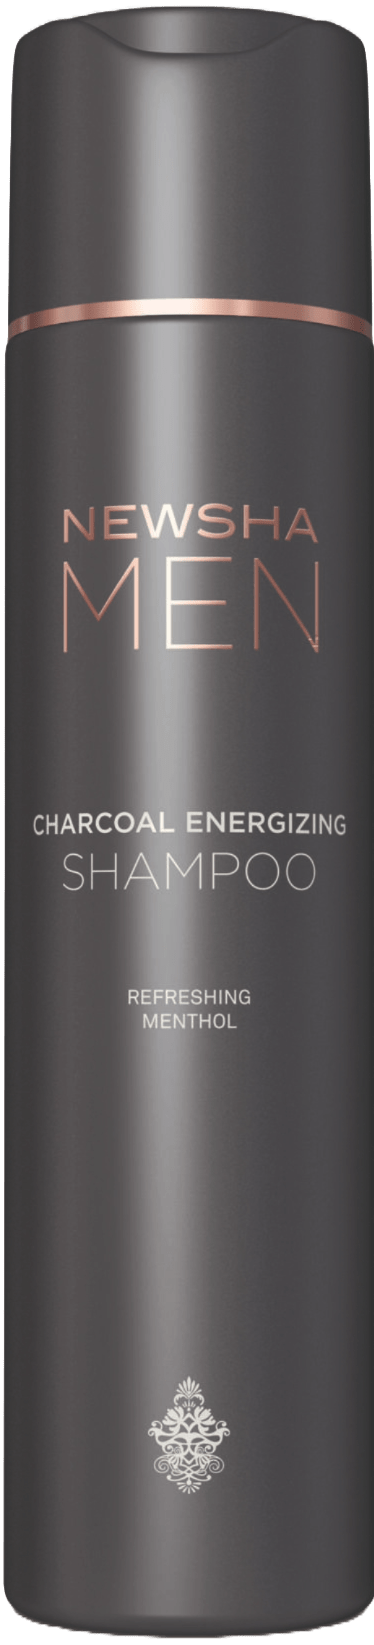 Charcoal Energizing Shampoo